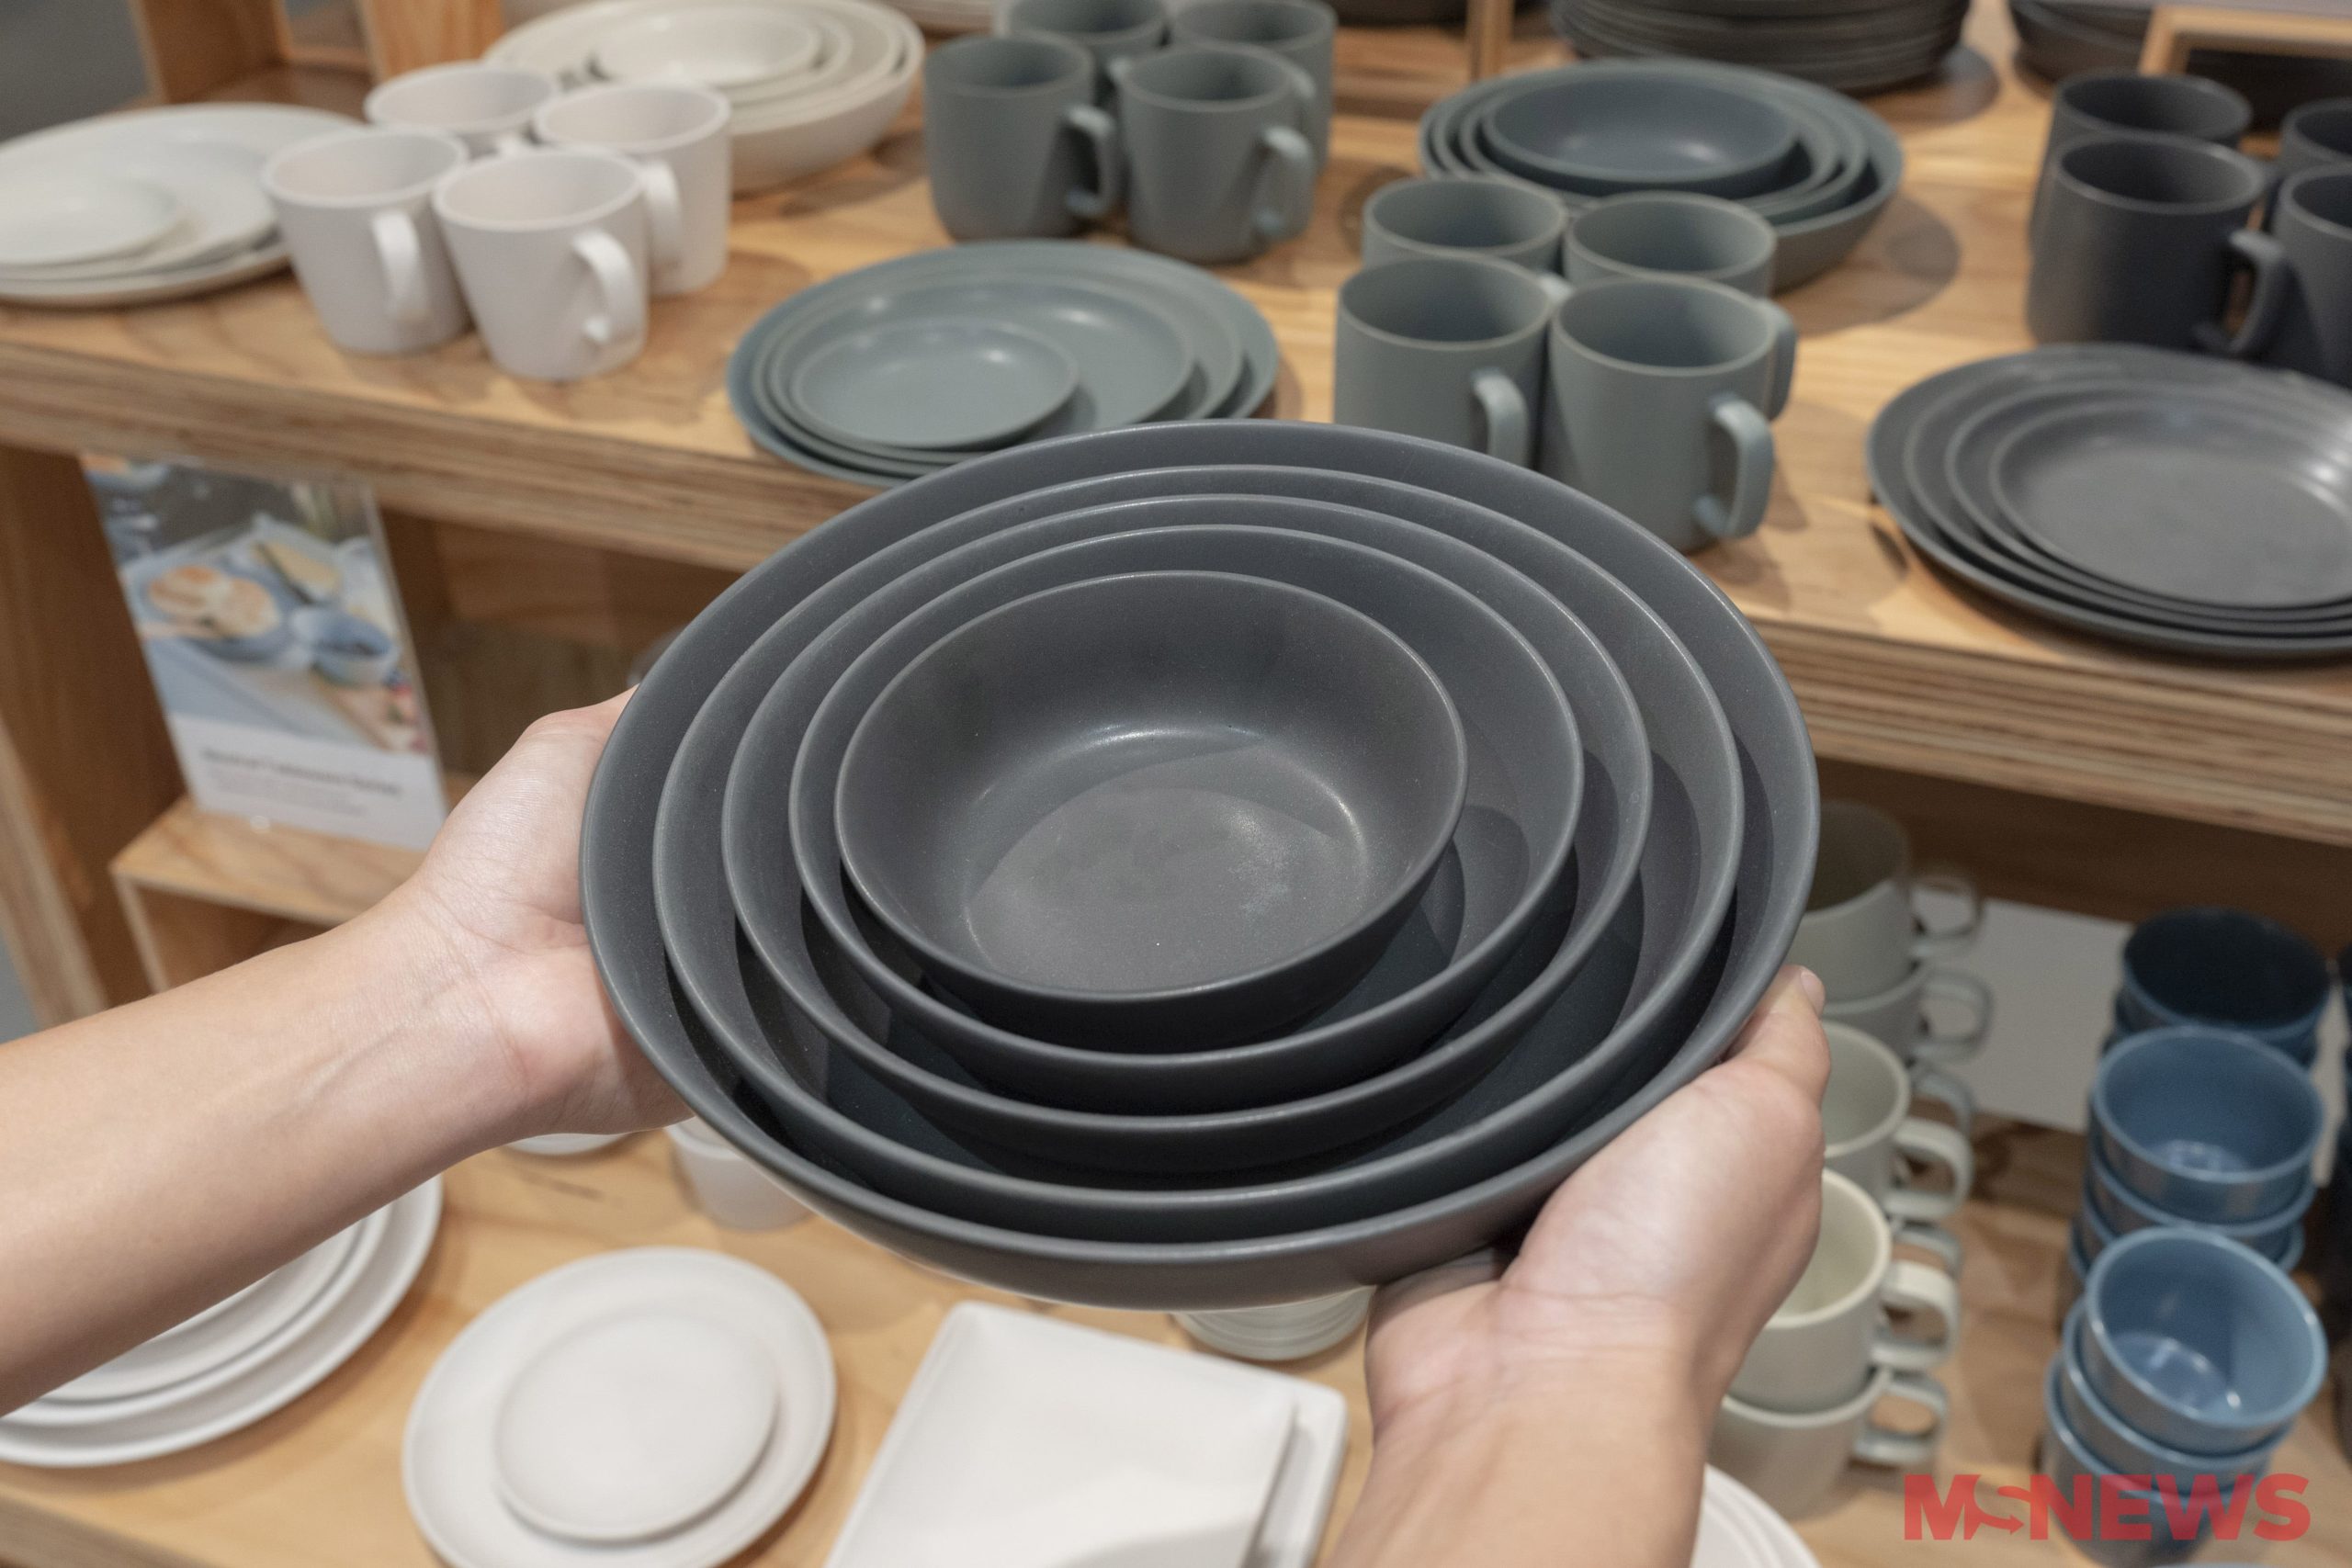 bowls2-min-scaled.jpg